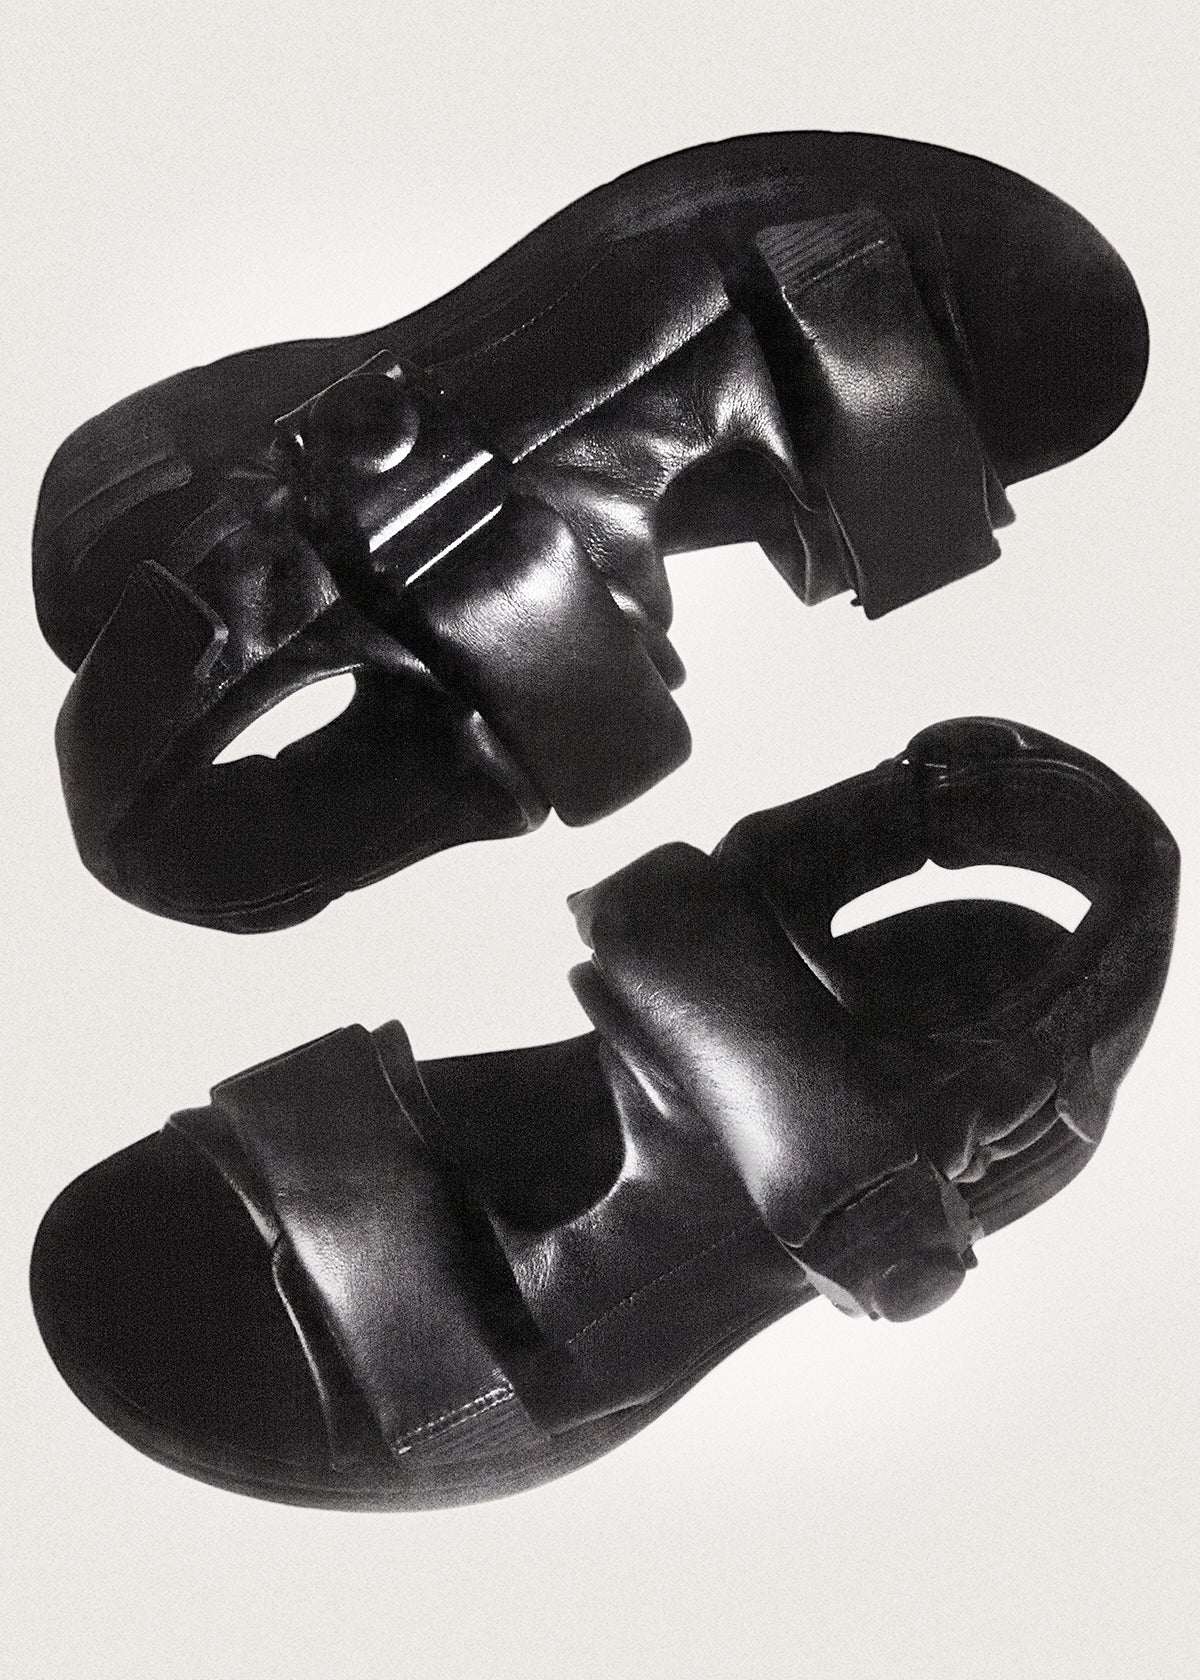 Buy Men Black Casual Sandals Online | SKU: 159-164871-11-10-Metro Shoes